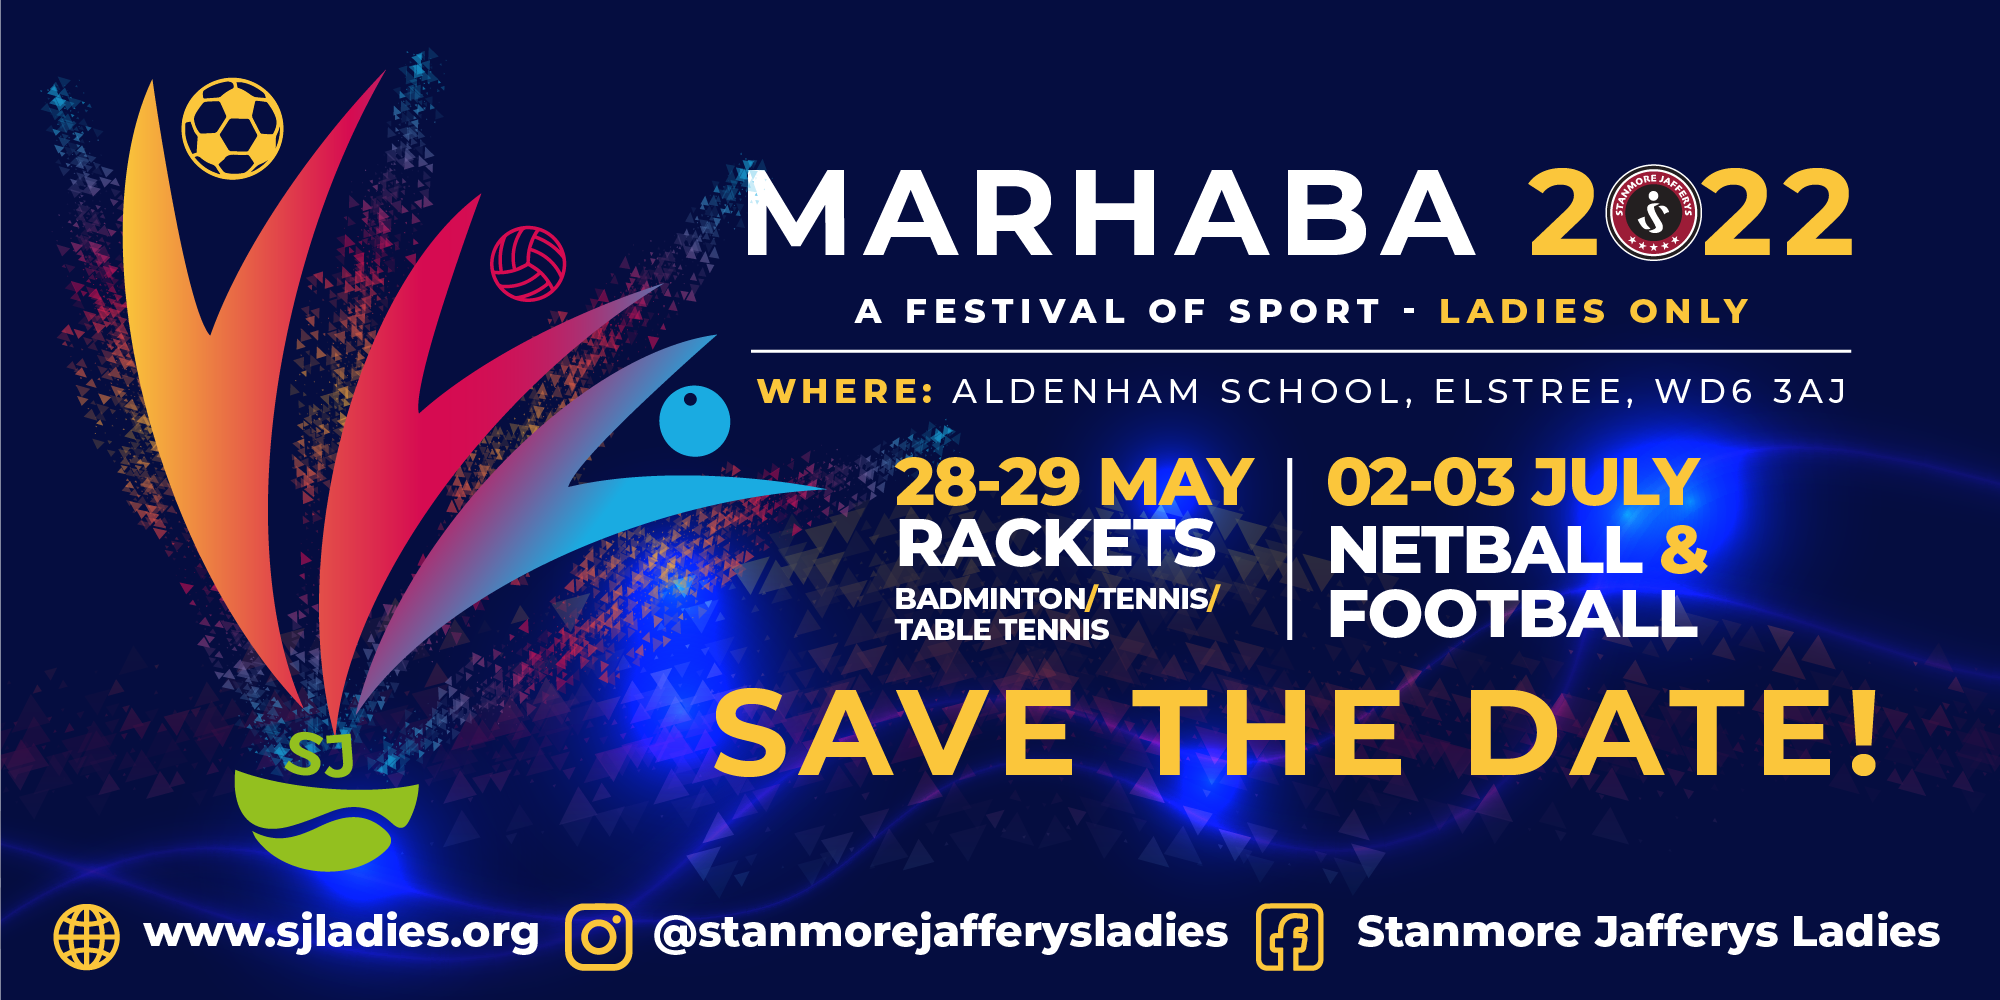 Marhaba returns as a Festival of Sport